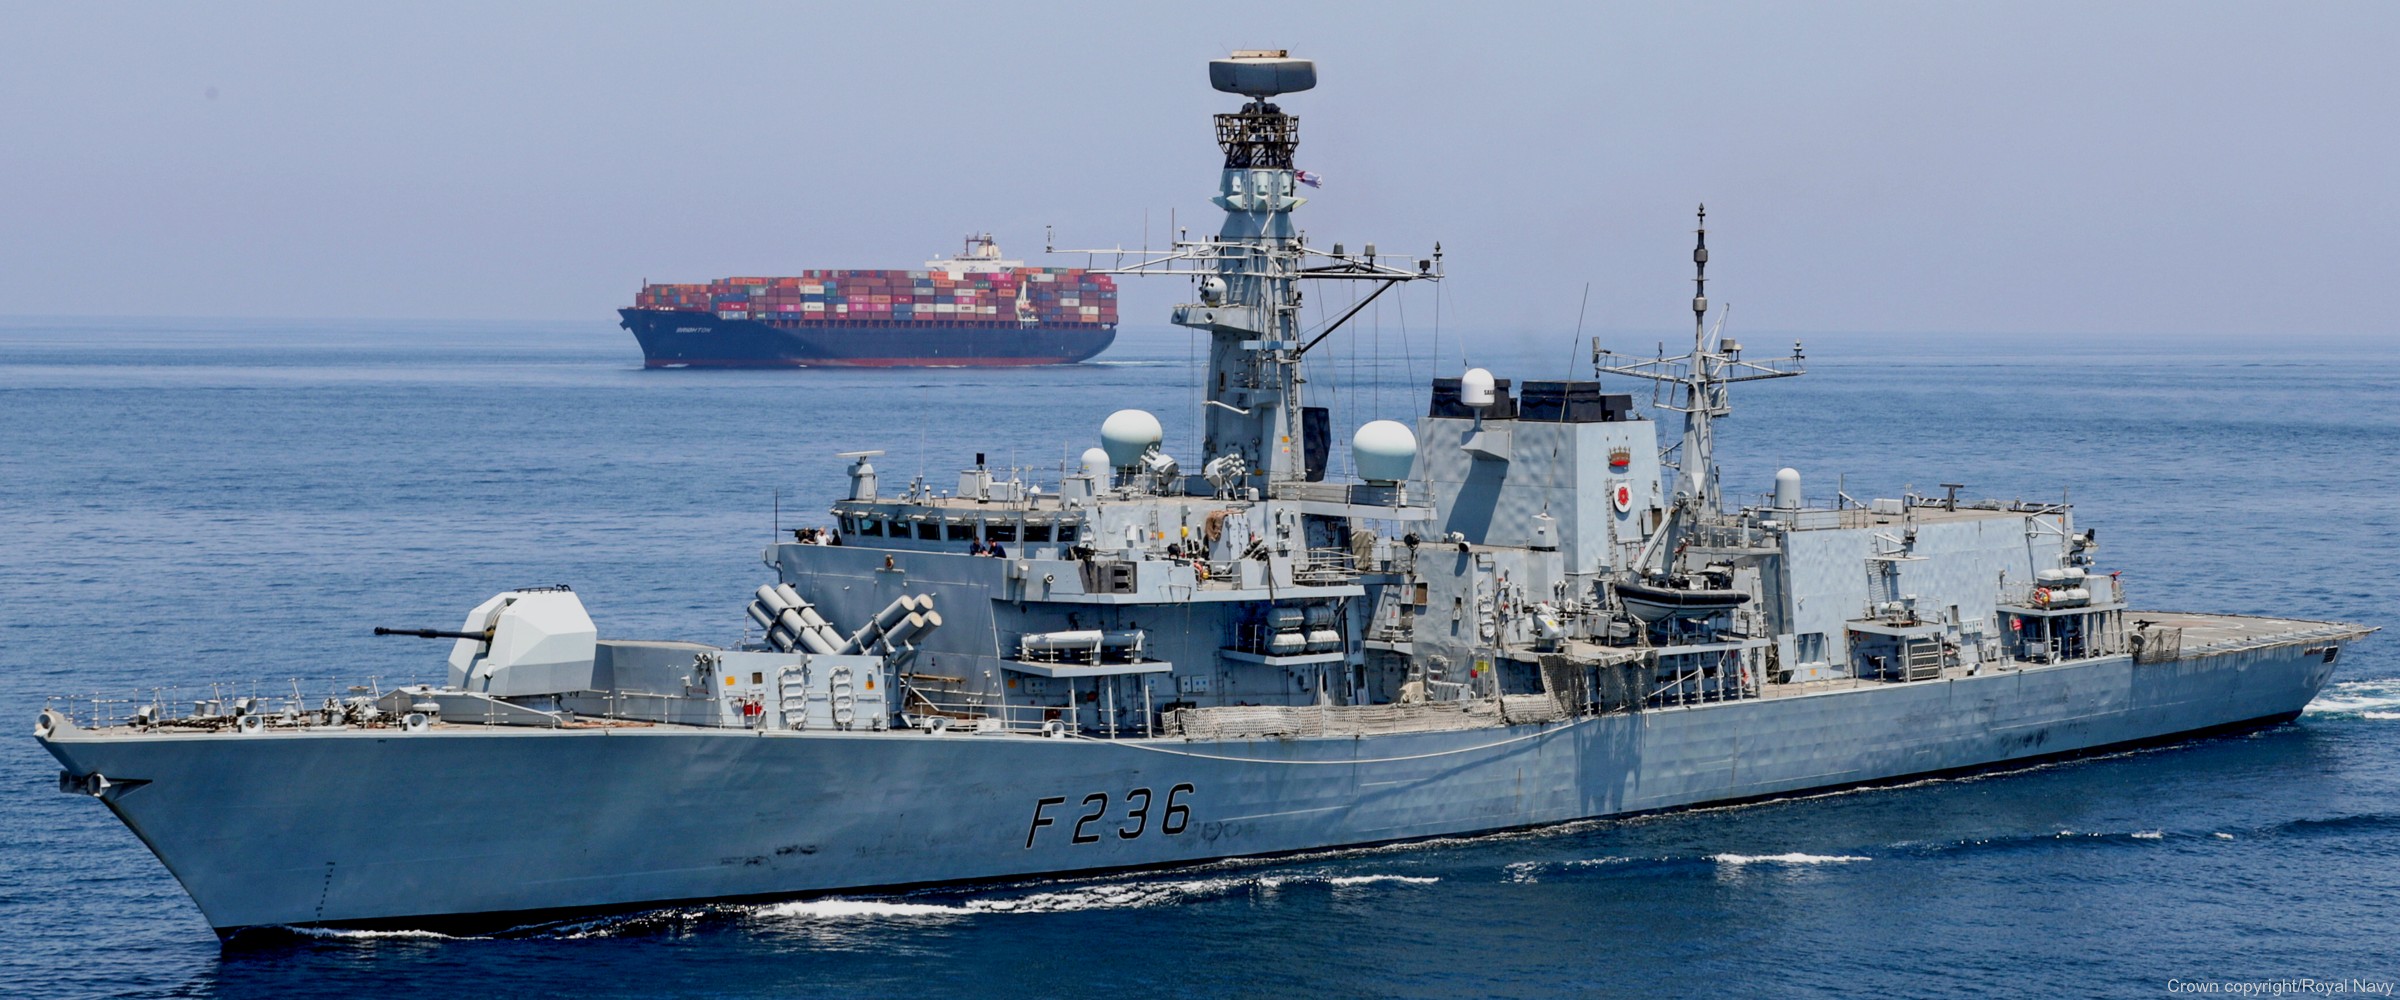 f-236 hms montrose type 23 duke class guided missile frigate ffg royal navy 36